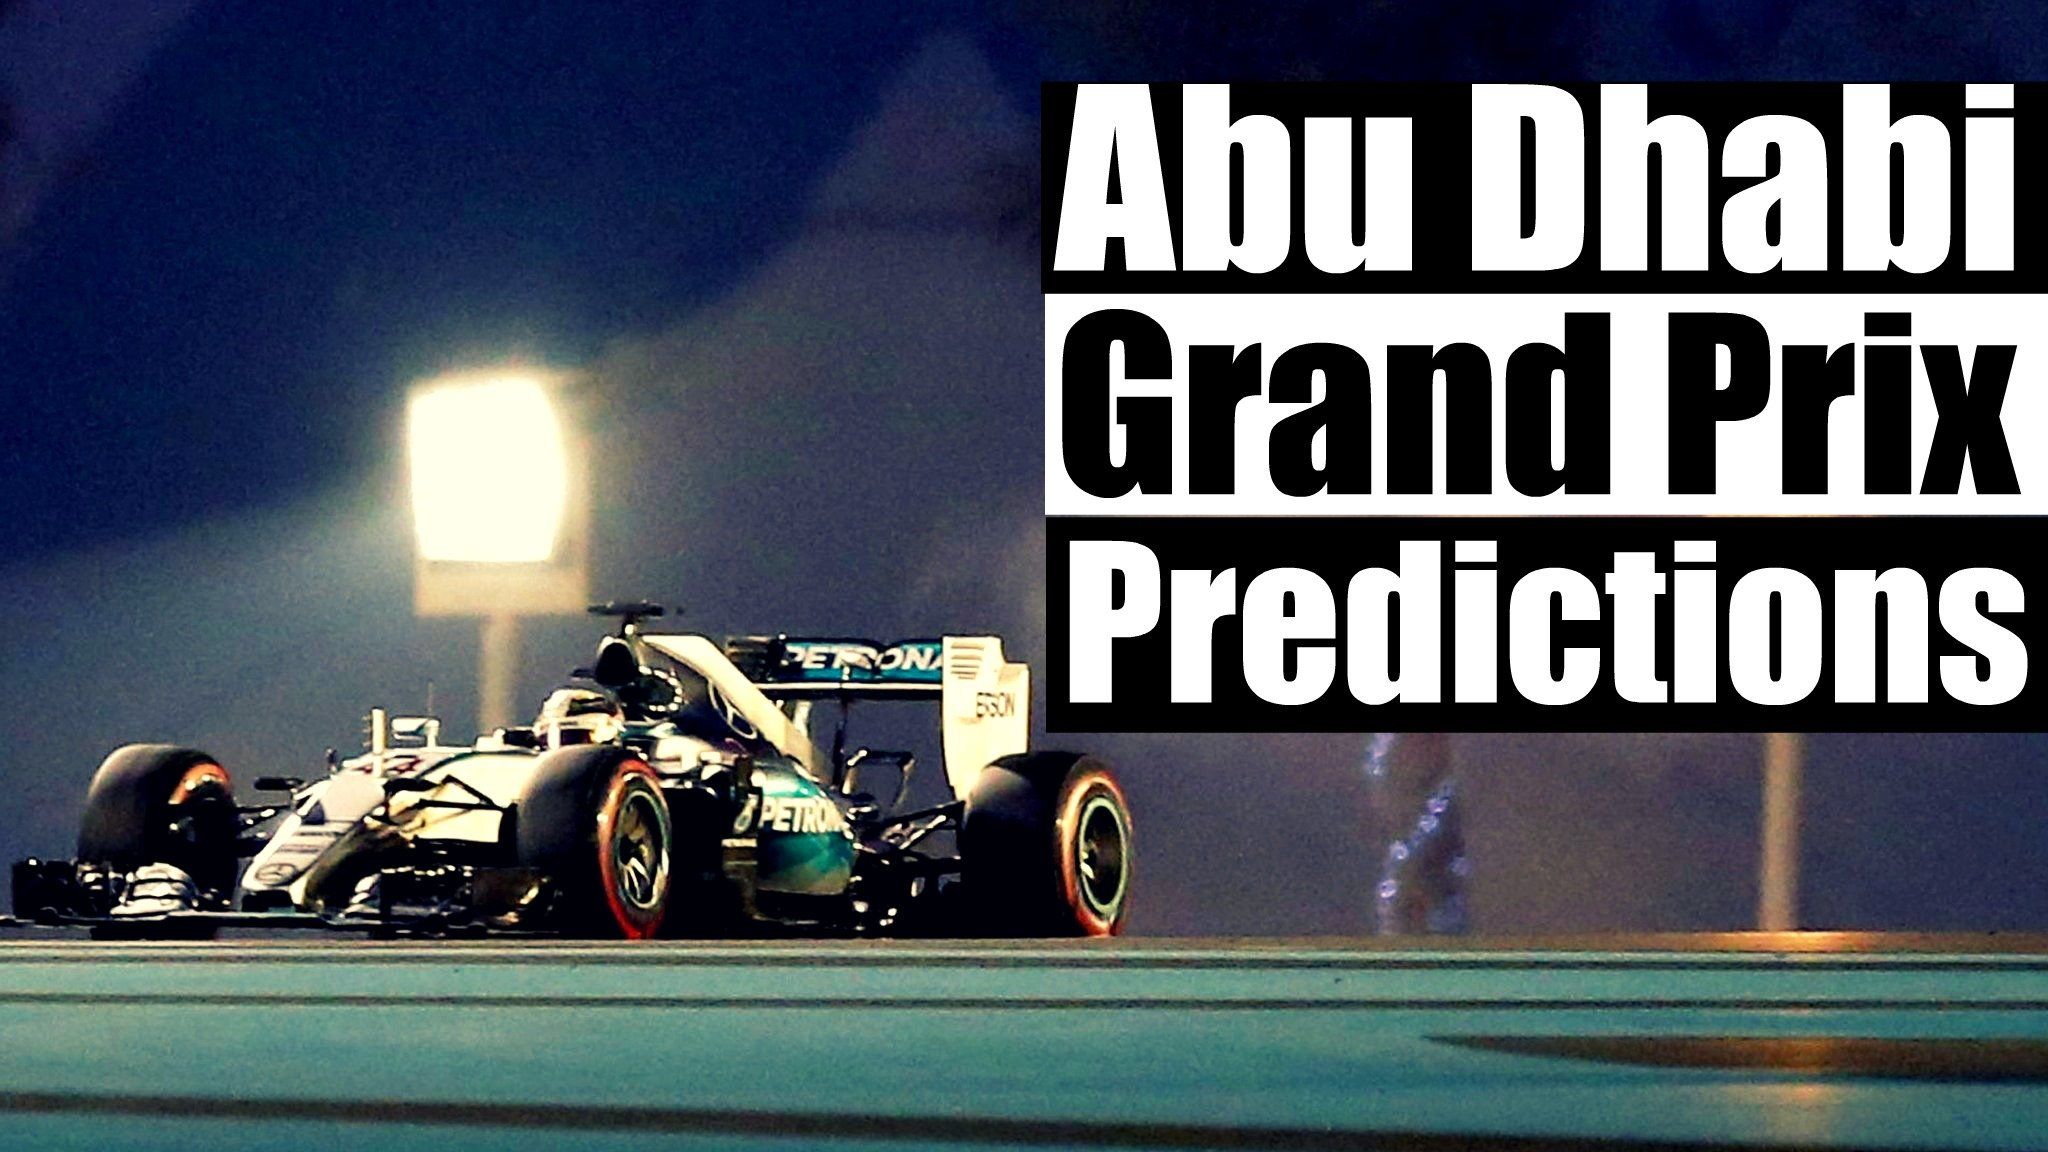 Abu Dhabi GP predictions